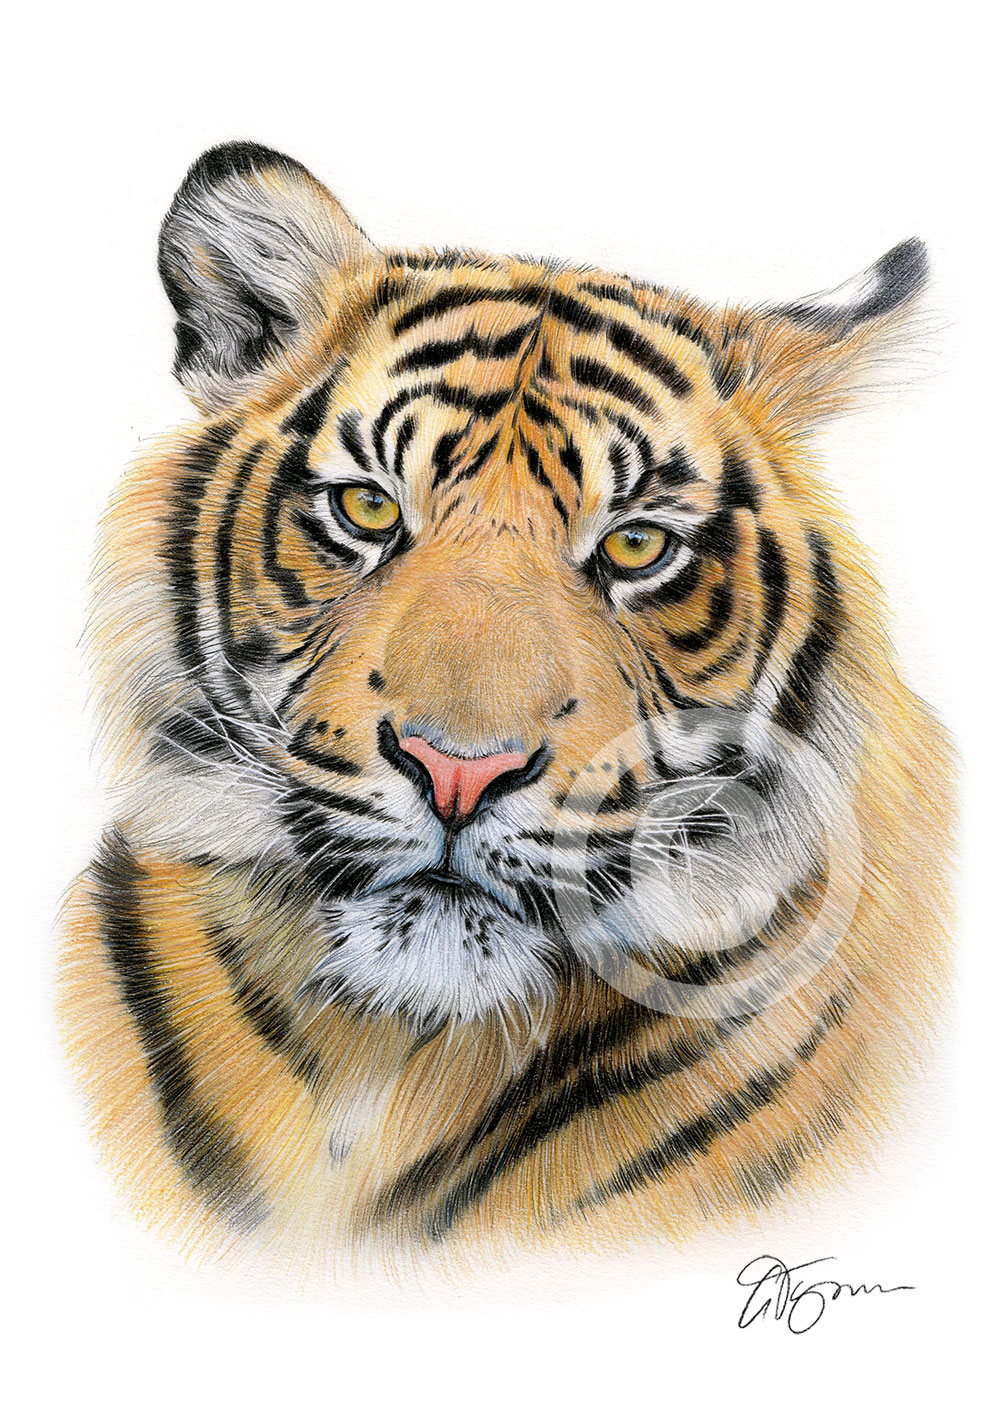 Colour pencil drawing of a Sumatran tiger by artist Gary Tymon